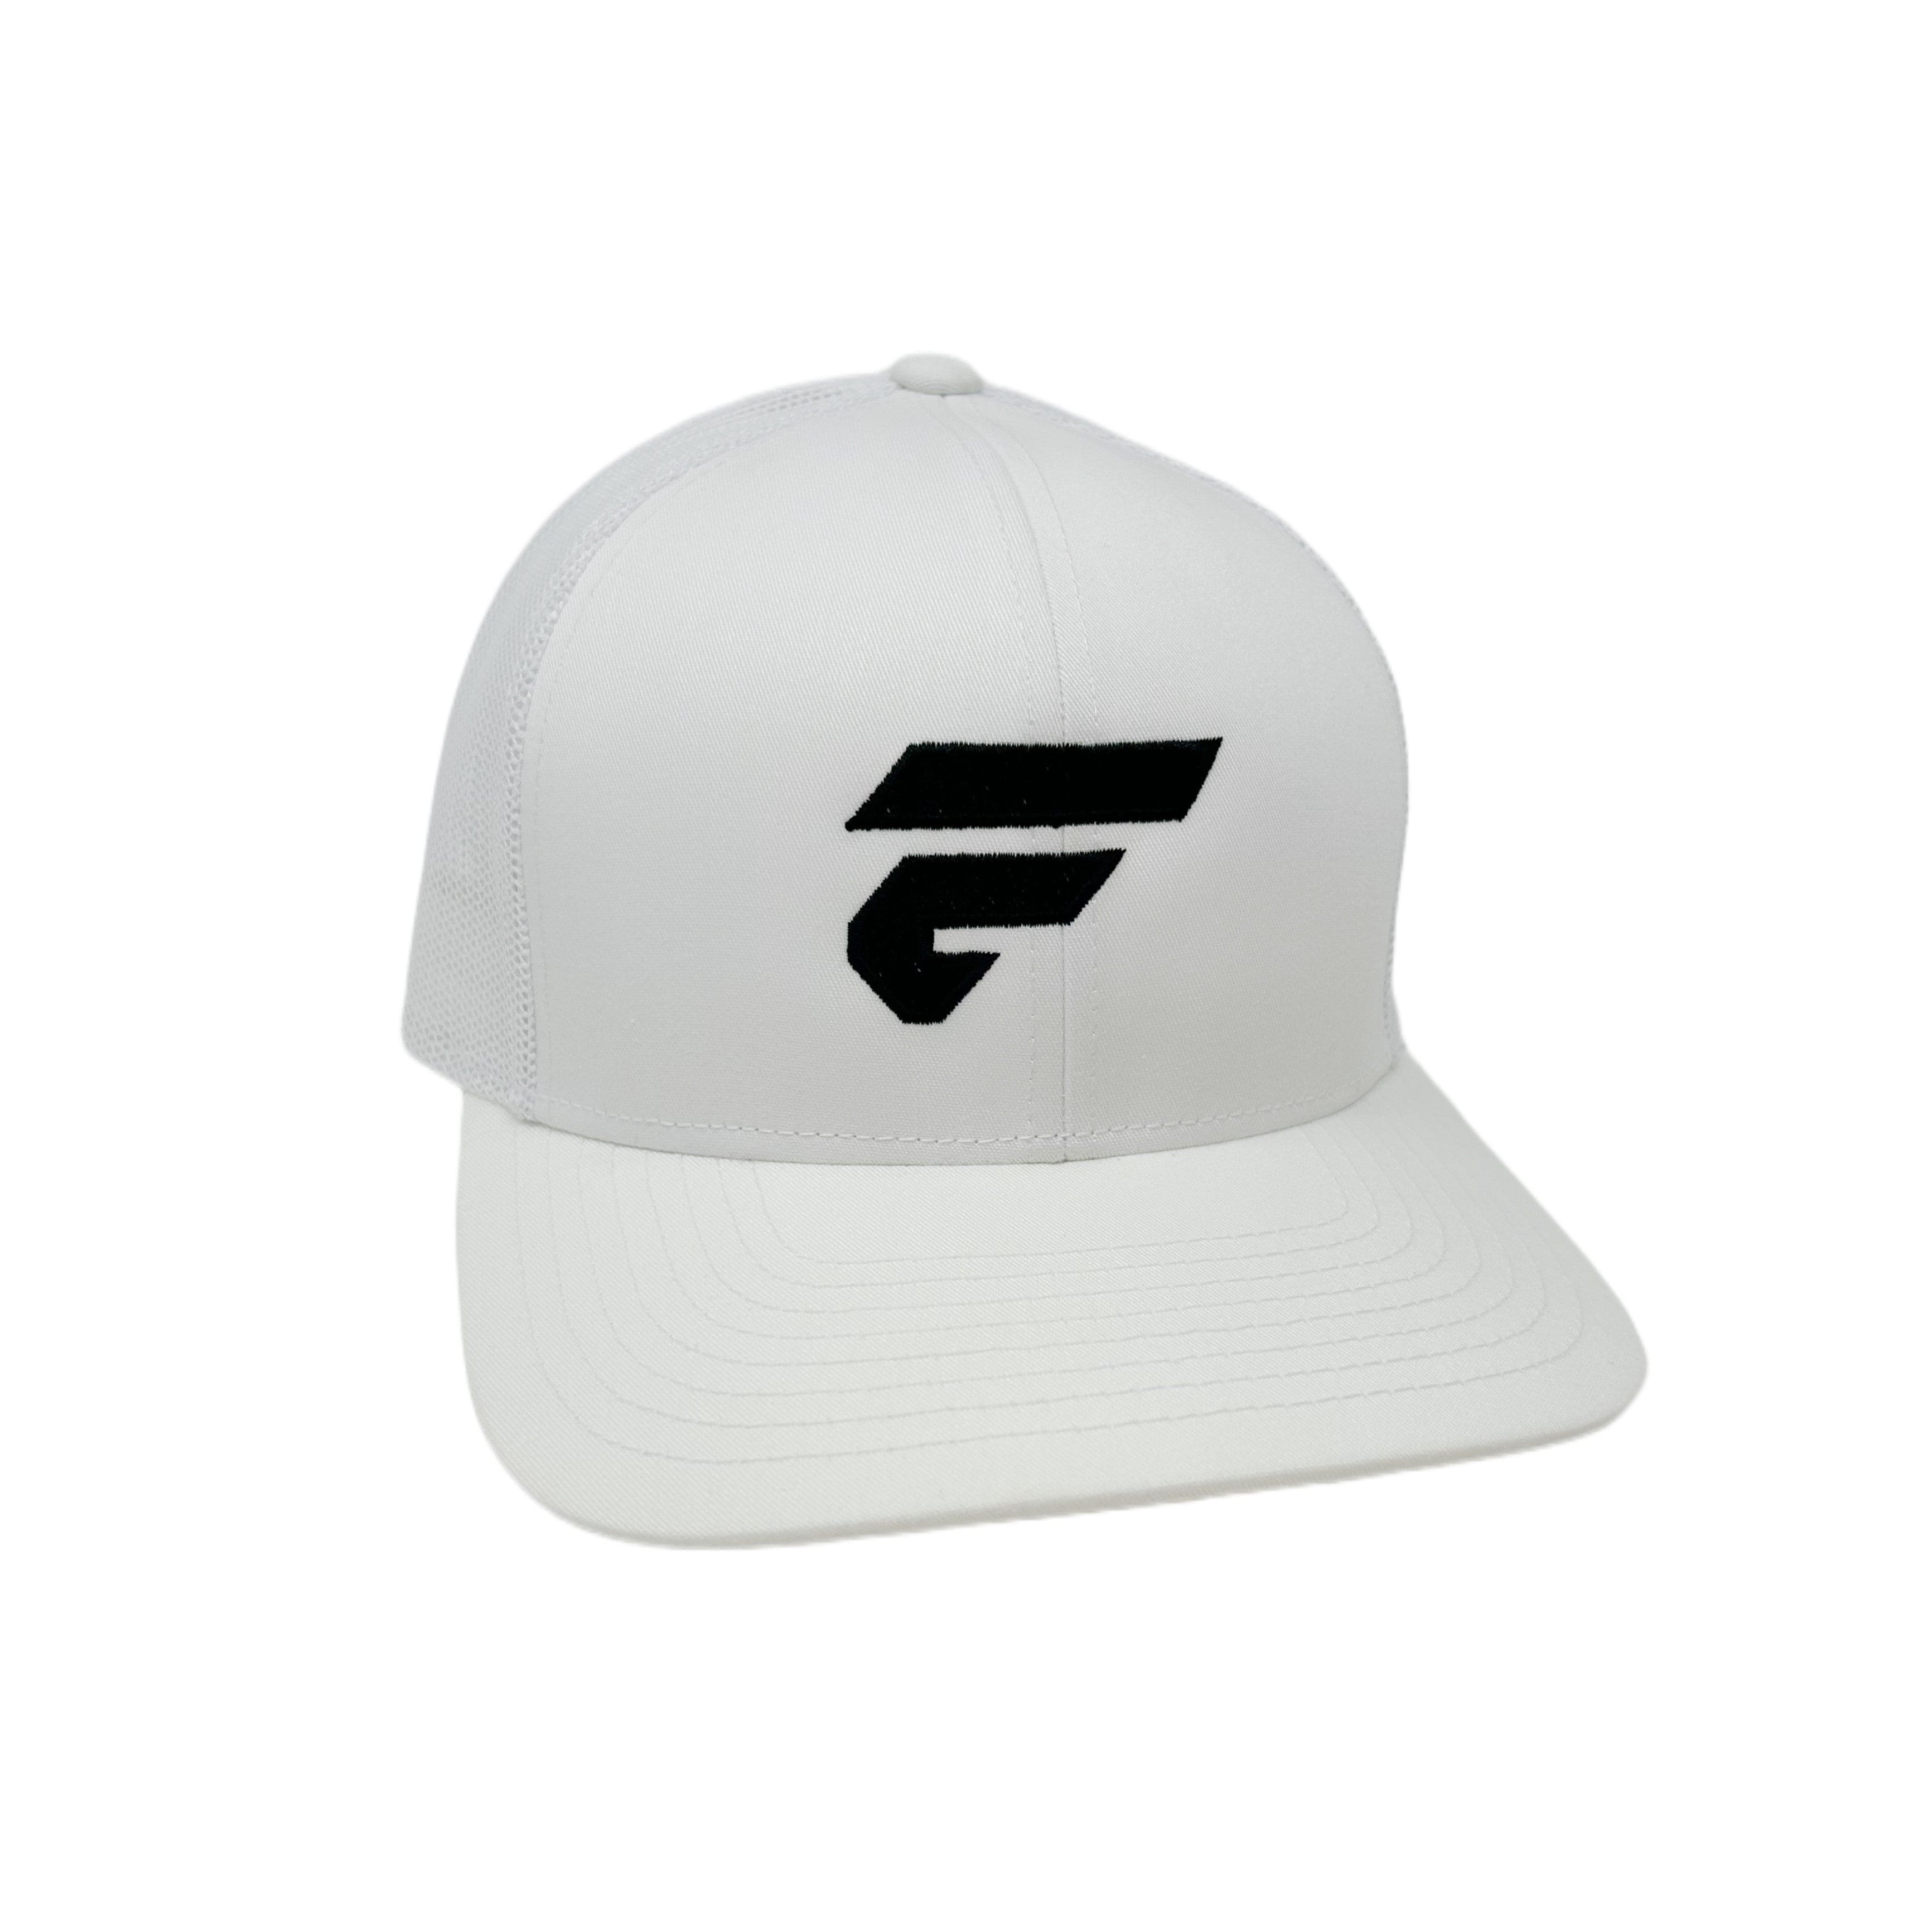 Fire Cornhole White Fitted Hat with Black Fire Cornhole Logo